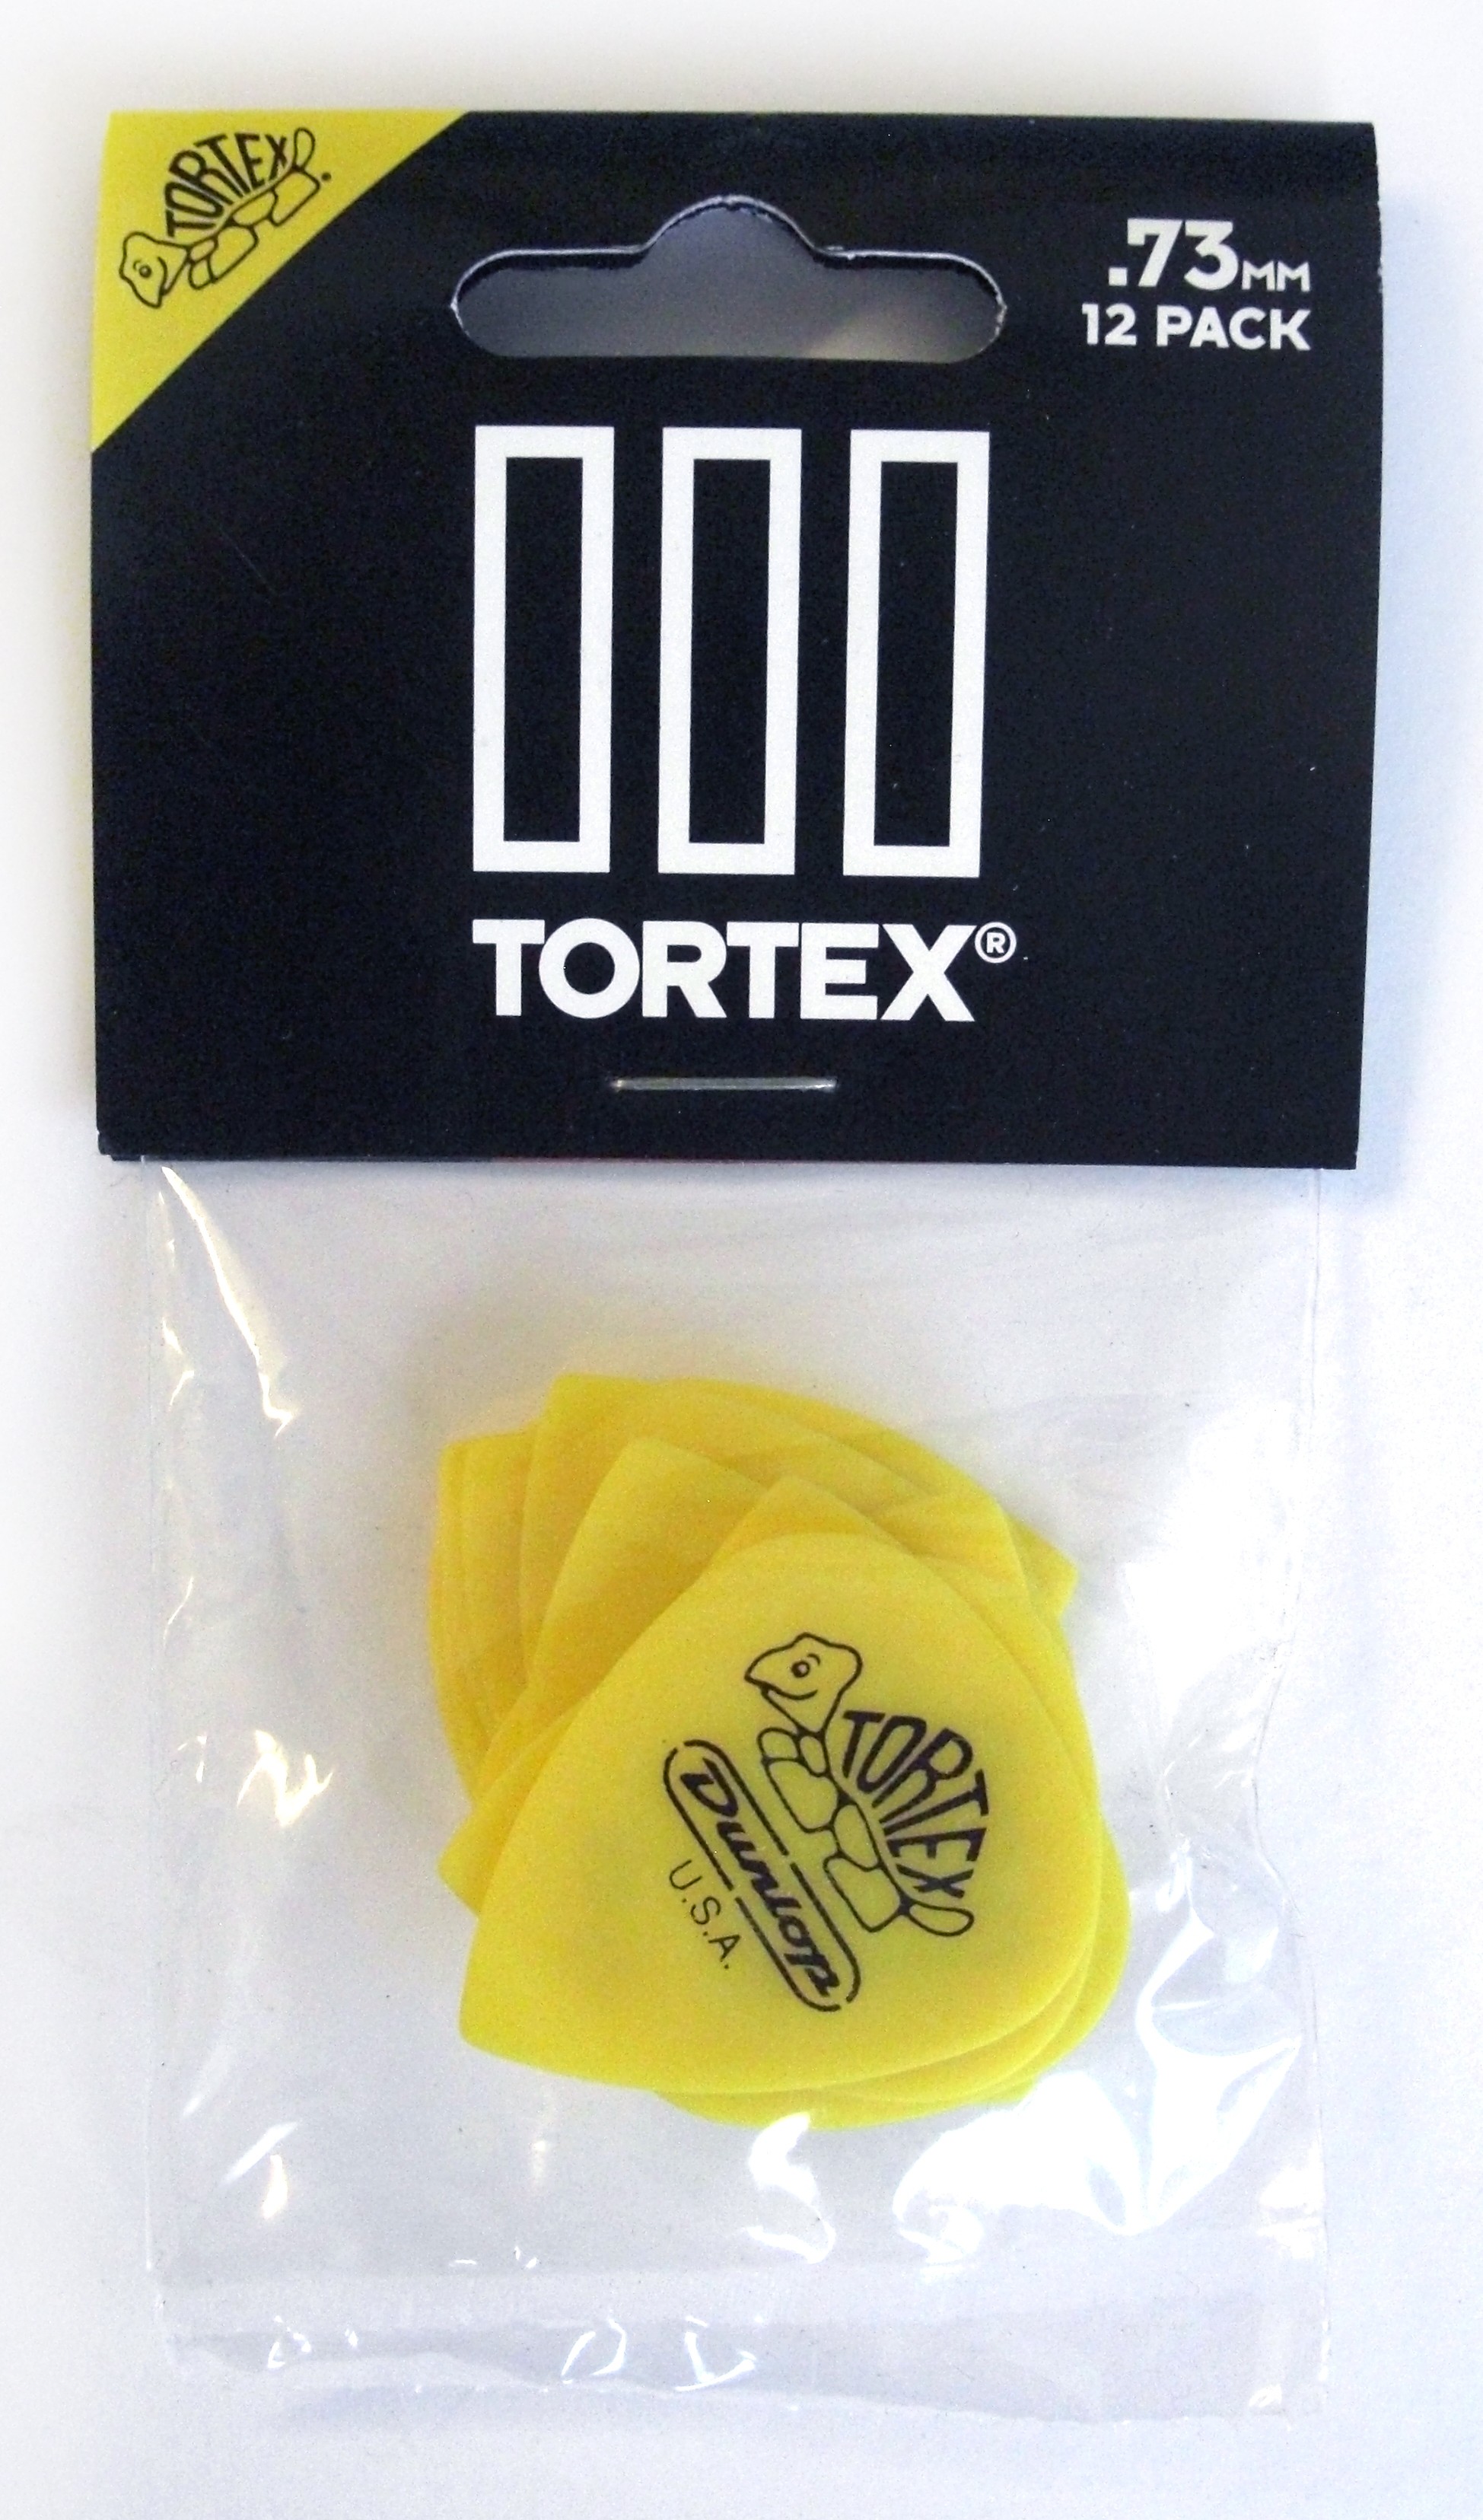 Dunlop Tortex III 462P.73 Players Pack - 12-pack med plekter